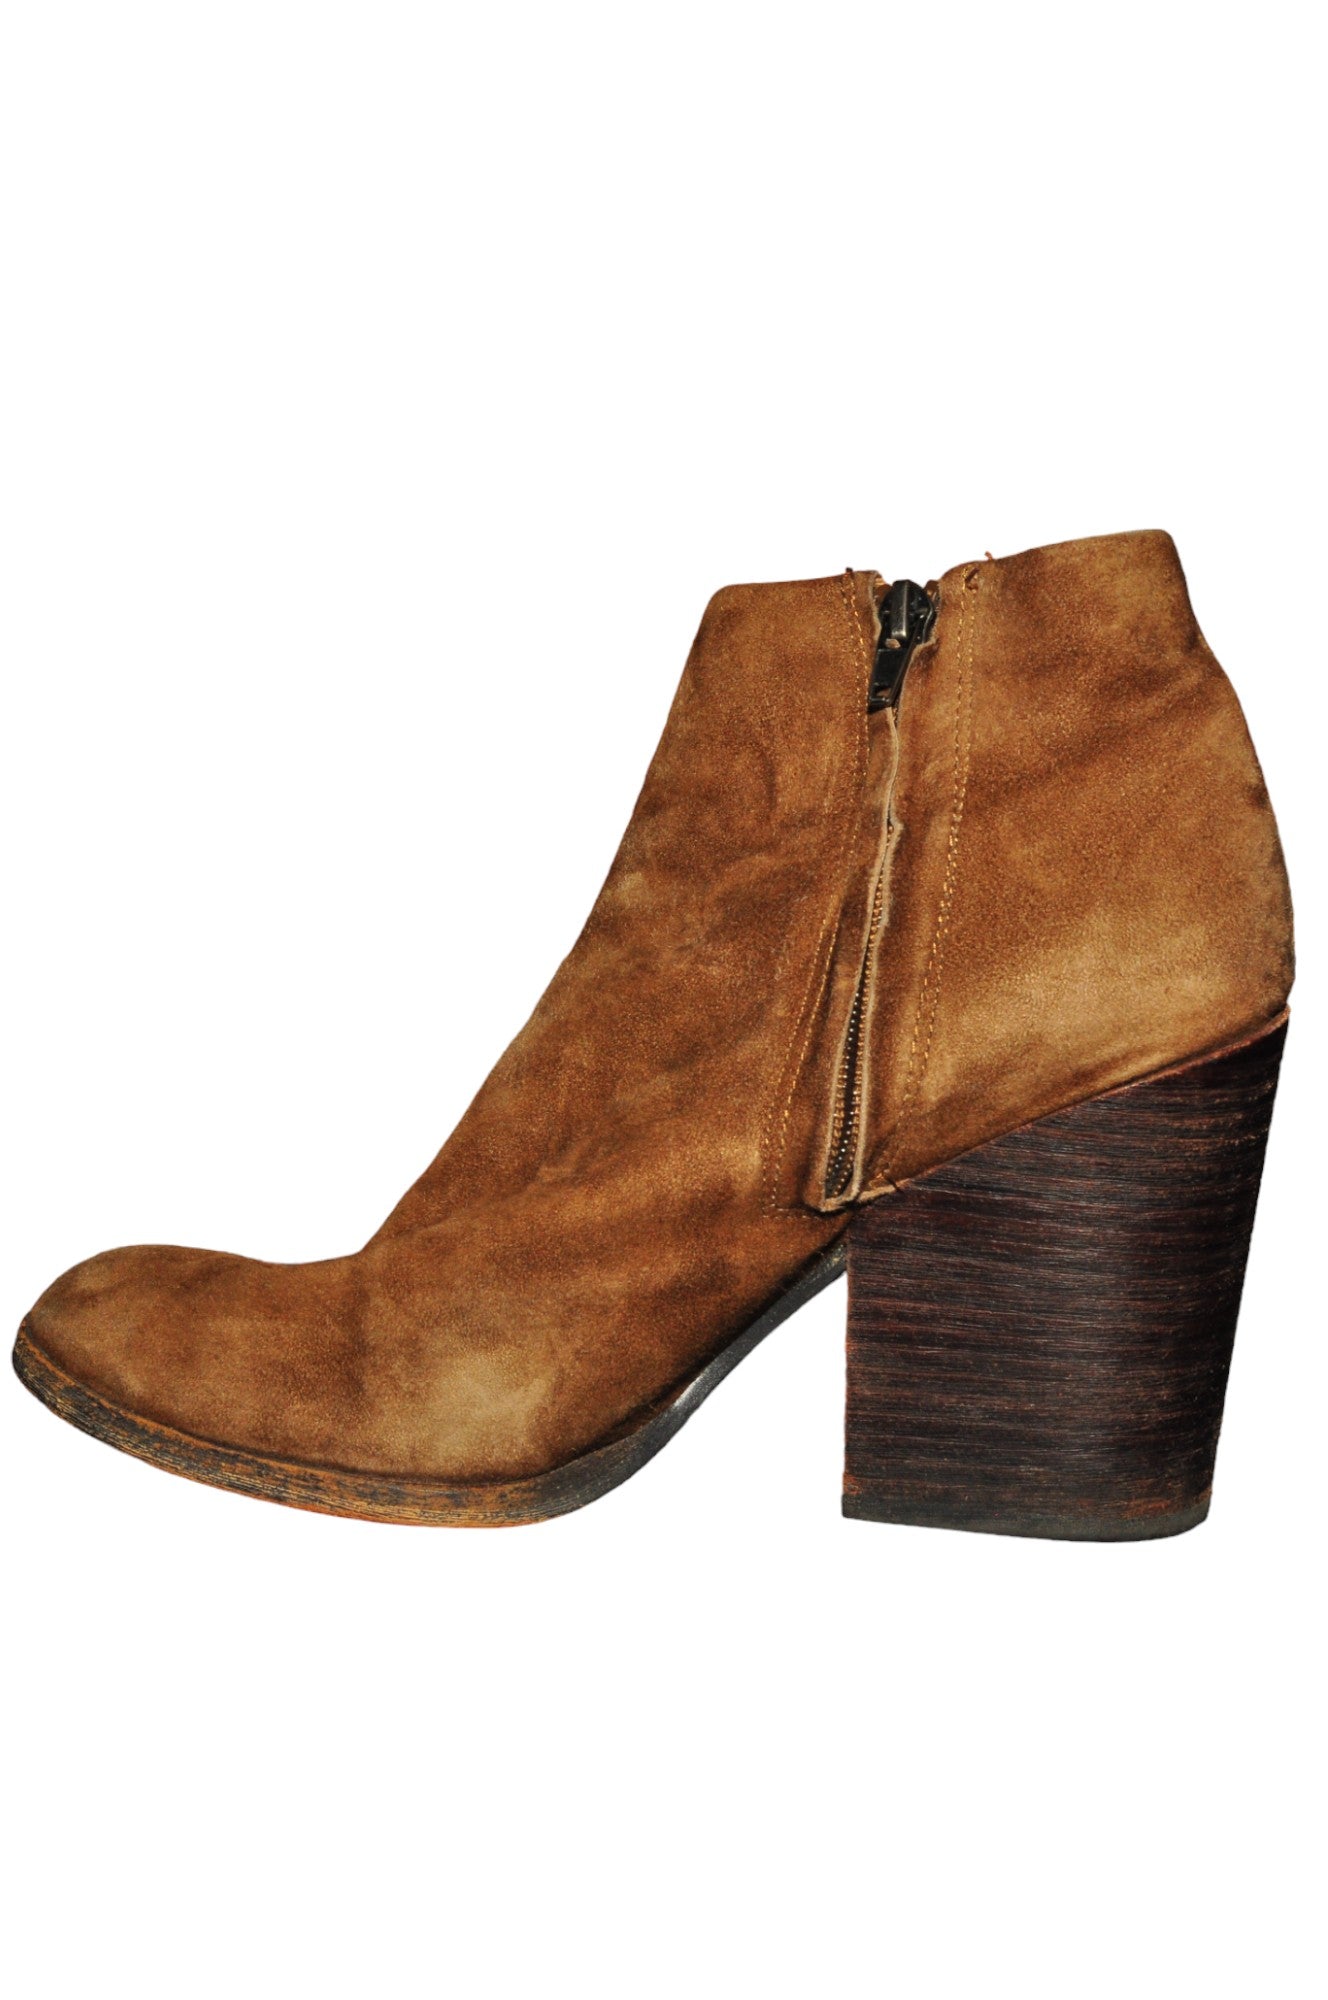 DOLCE VITA Women Boots Regular fit in Brown - Size 8 | 65.99 $ KOOP